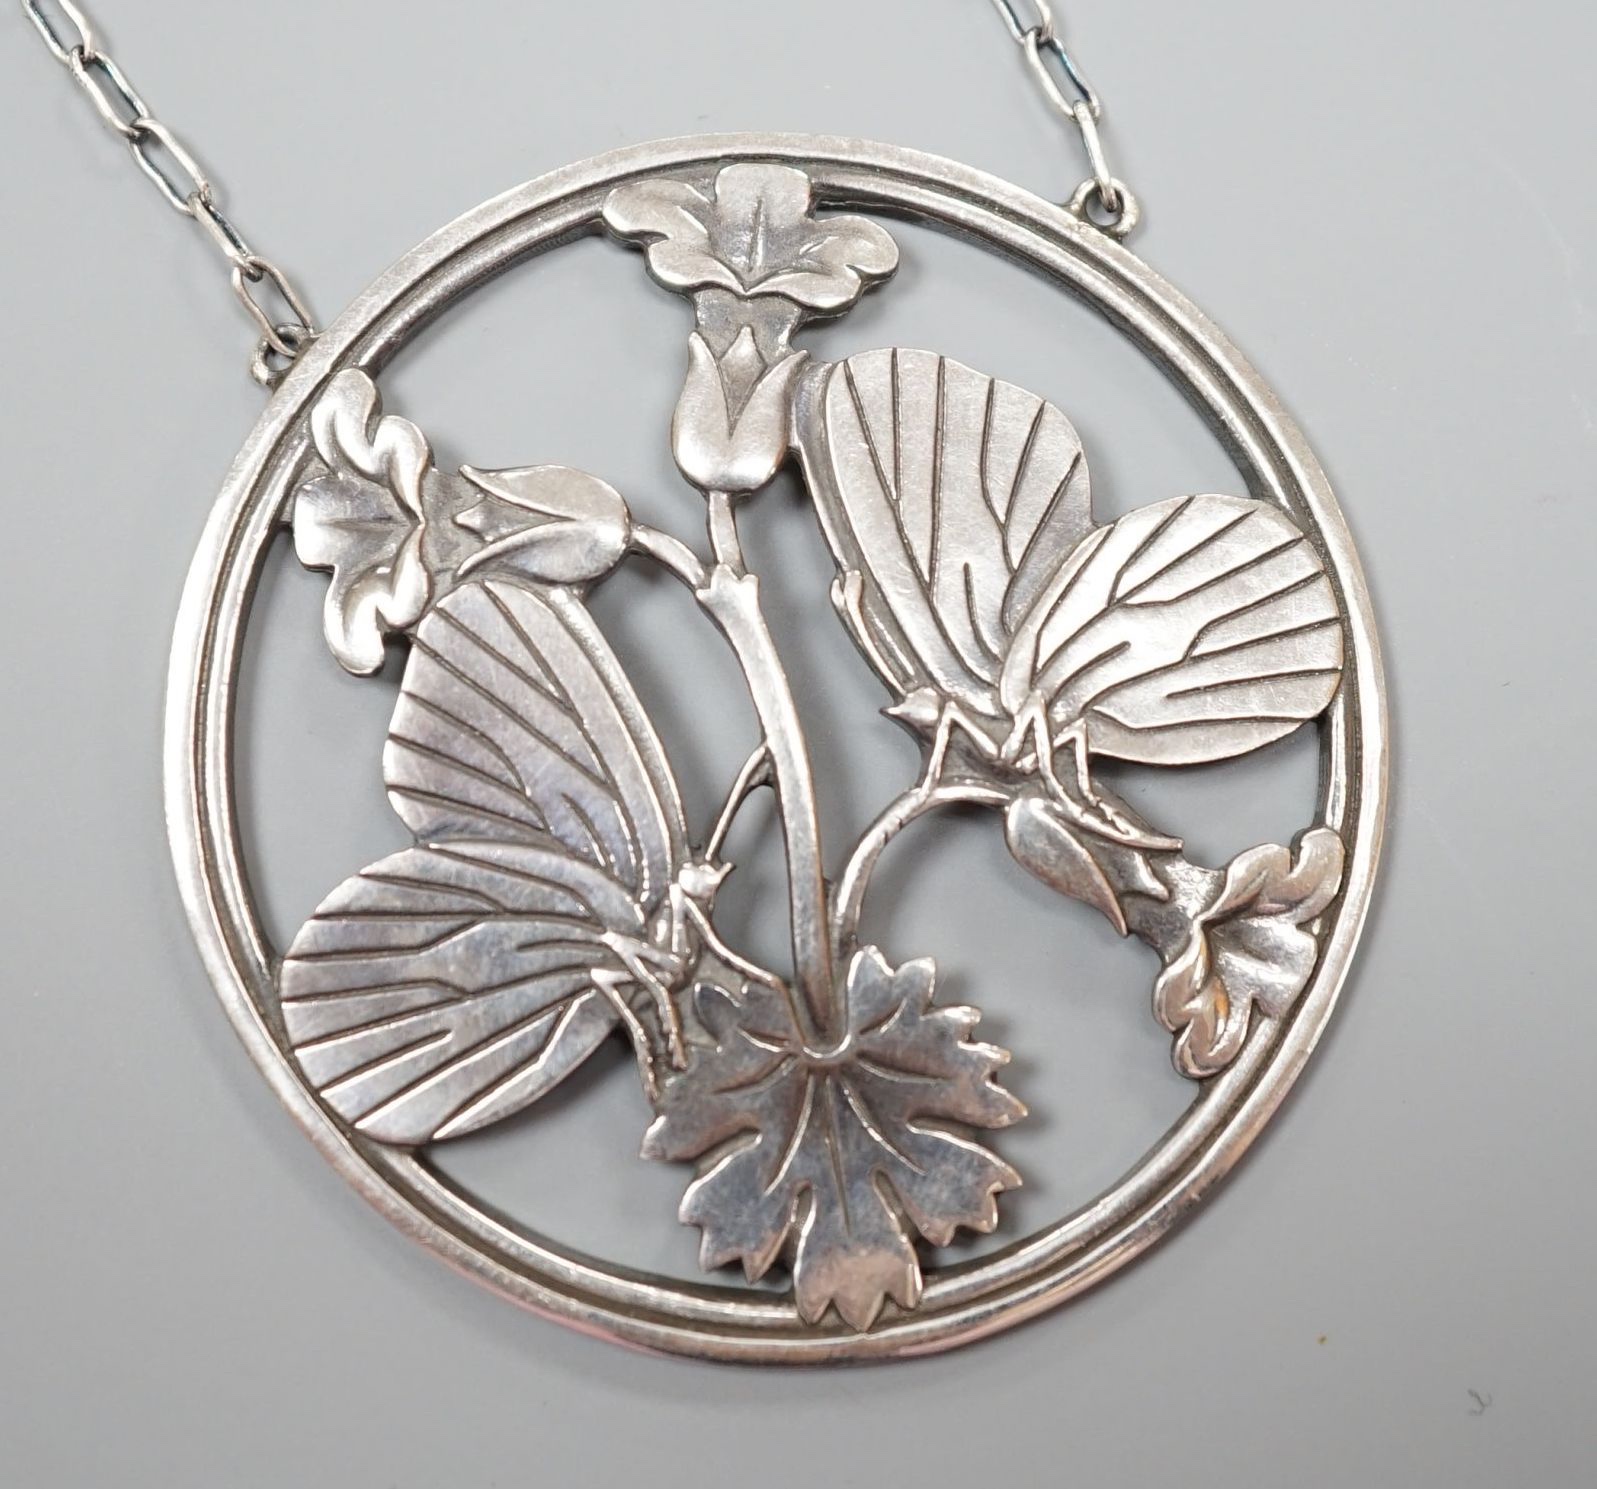 A George Jensen (designed by Arno Malinowski) sterling 'twin moth amid foliage' circular pendant necklace, no. 105, pendant diameter 51mm, chain 54cm.